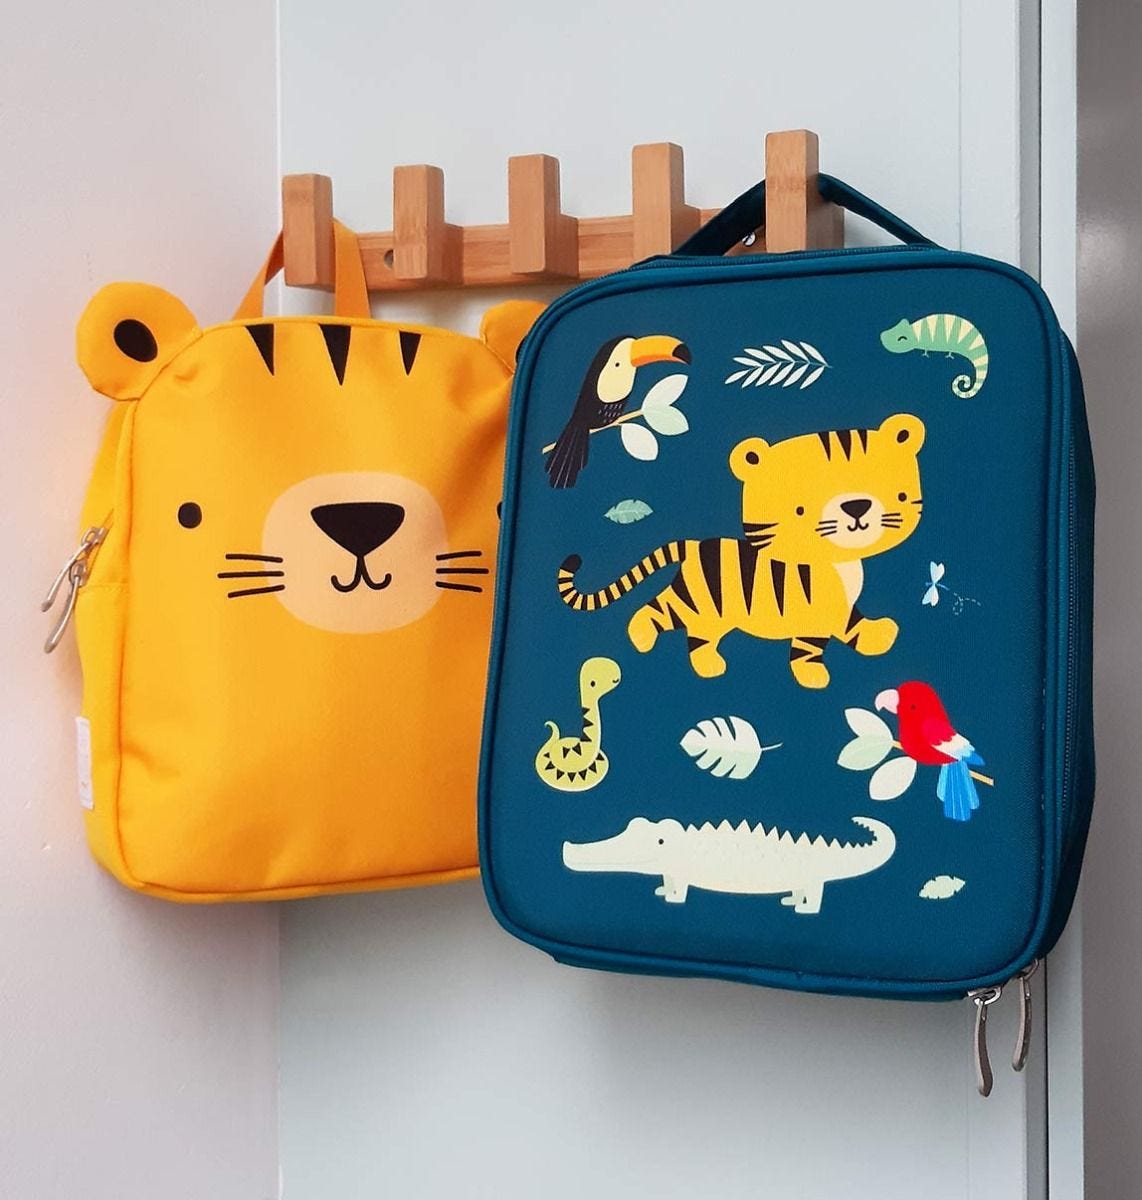 Deer Industries Lunch Box Bag, Cool Bag Jungle Tiger, Lunch Bag for Toddlers, Lunch Bag for preschool, Thermal Bag for Kids, Picnic Bag for Kids